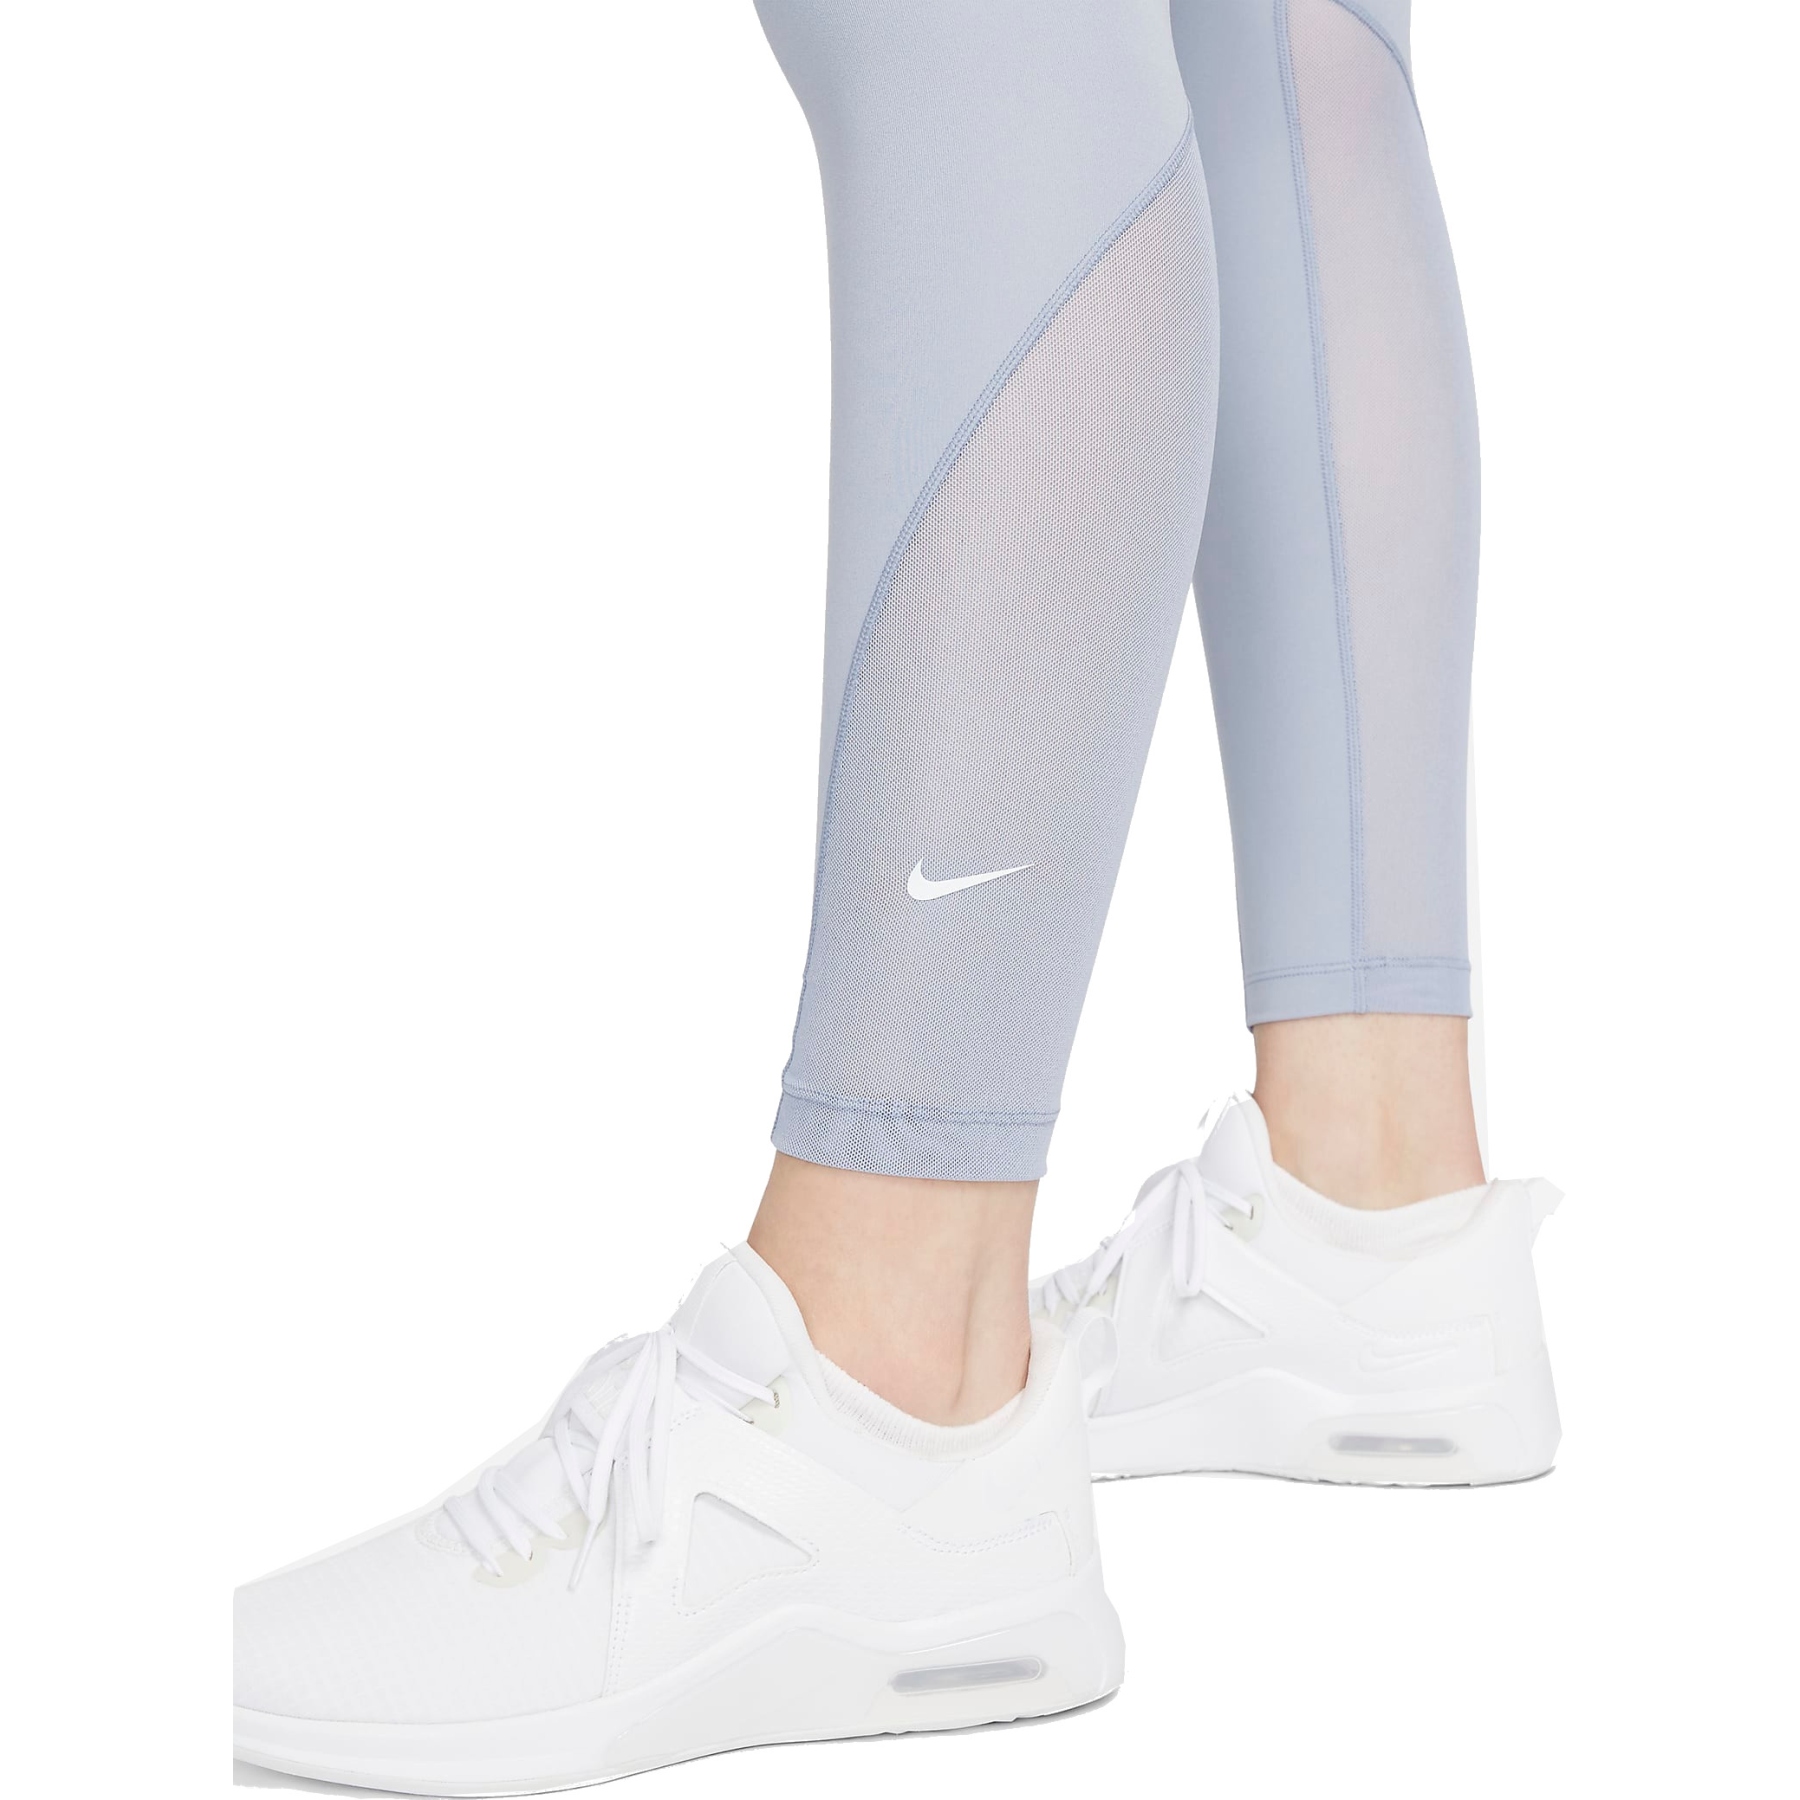 Nike - One Dri-Fit-Shorts Damen indigo haze kaufen im Sport Bittl Shop